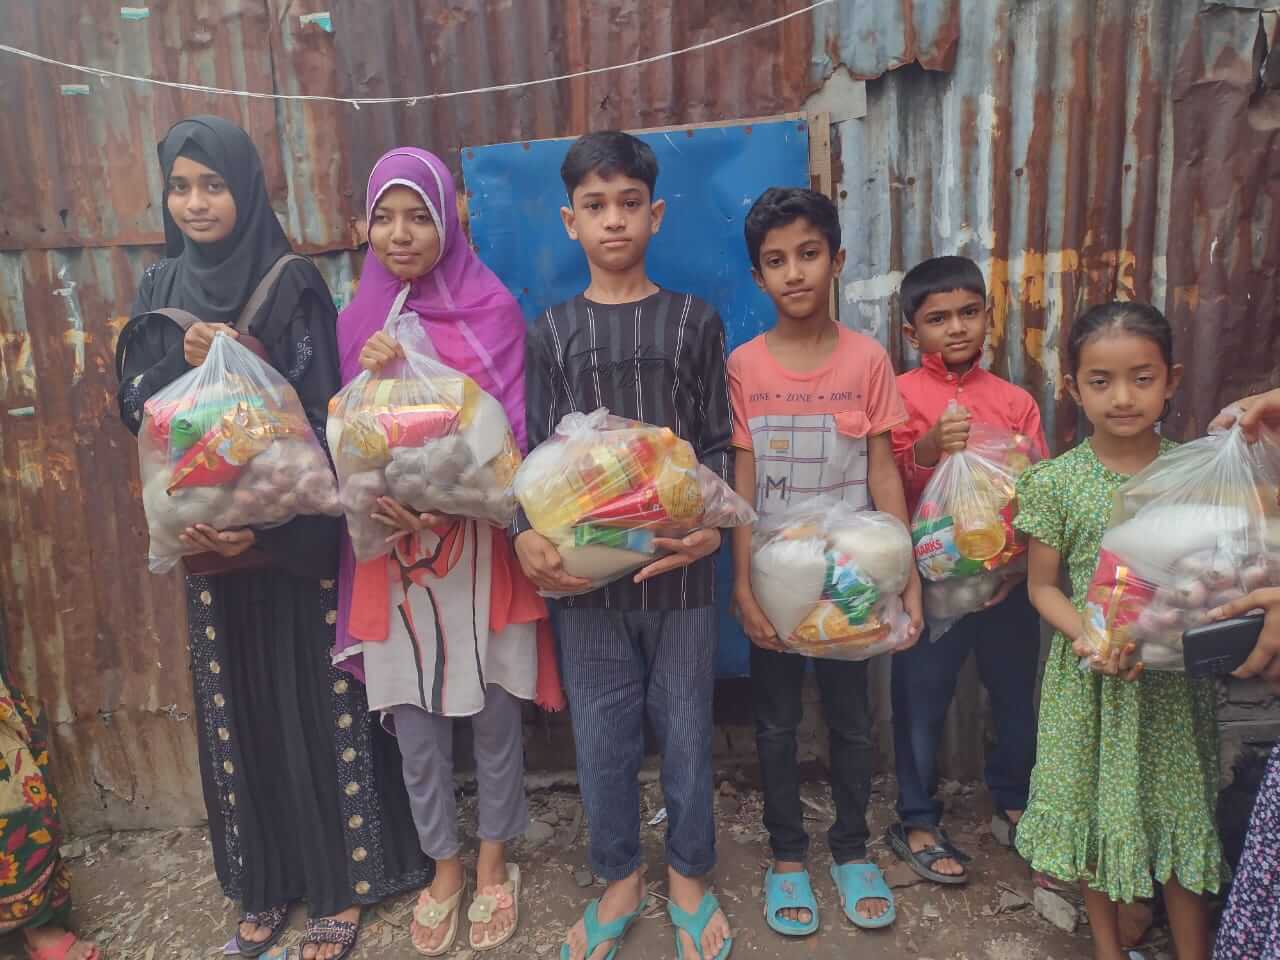 Kids in Mohakhali received eid gifts (Jui, Suma, Rakib, Romjan, 2161 Abdullah, Sumona)